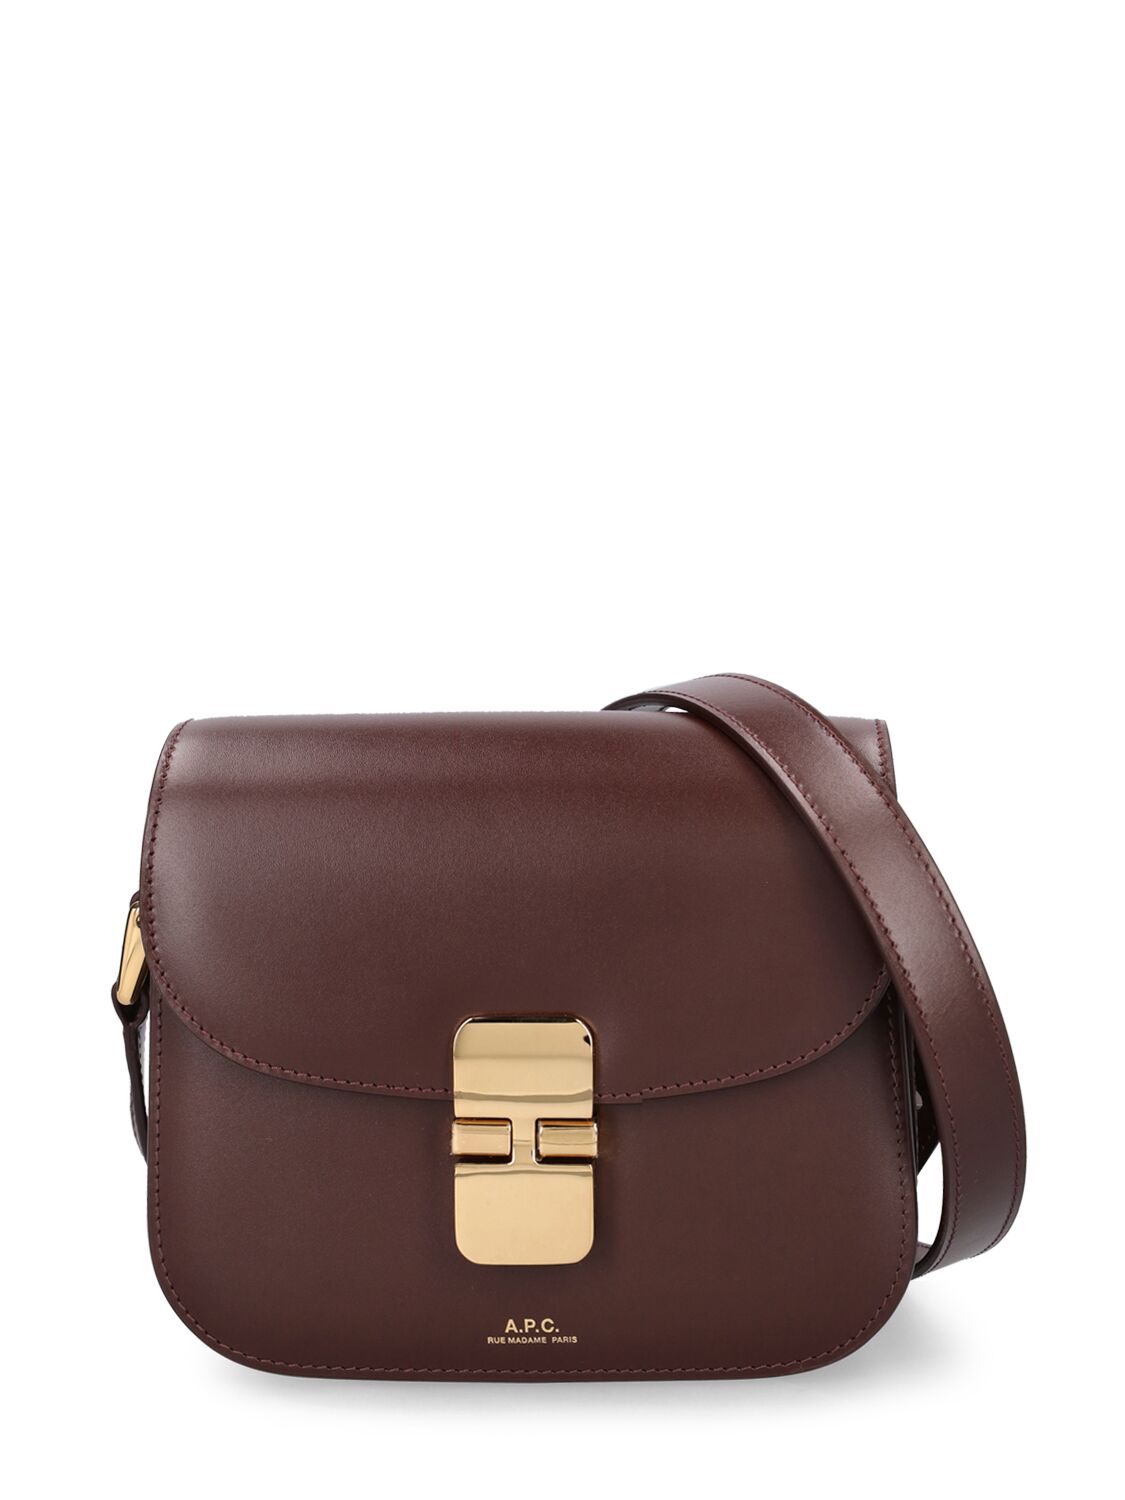 Apc Mini Grace Leather Shoulder Bag In Cafe